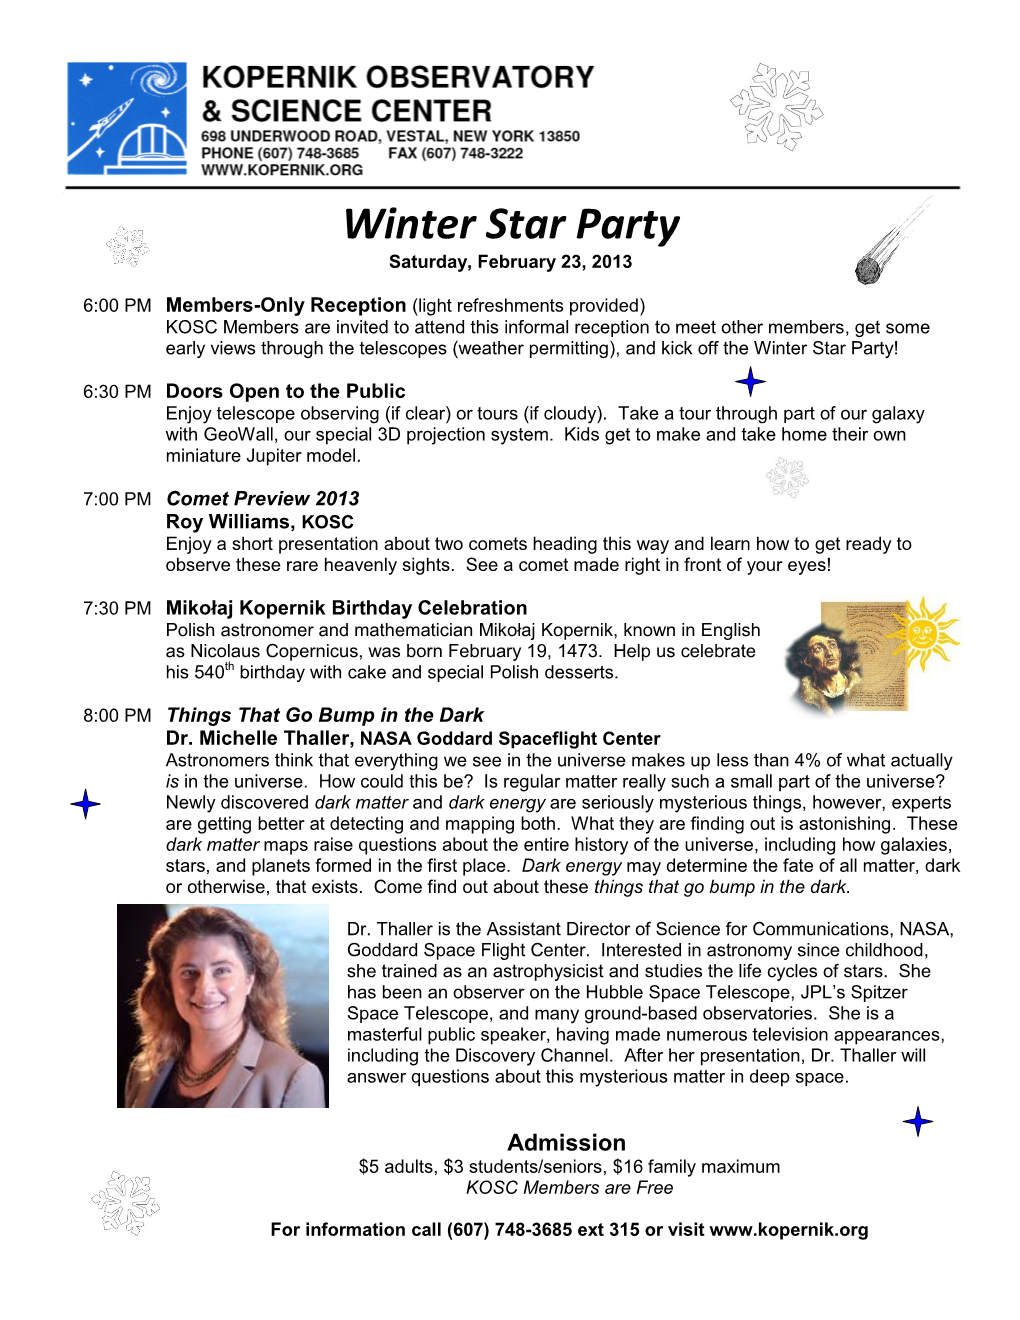 Kopernik Observatory Winter Star Party